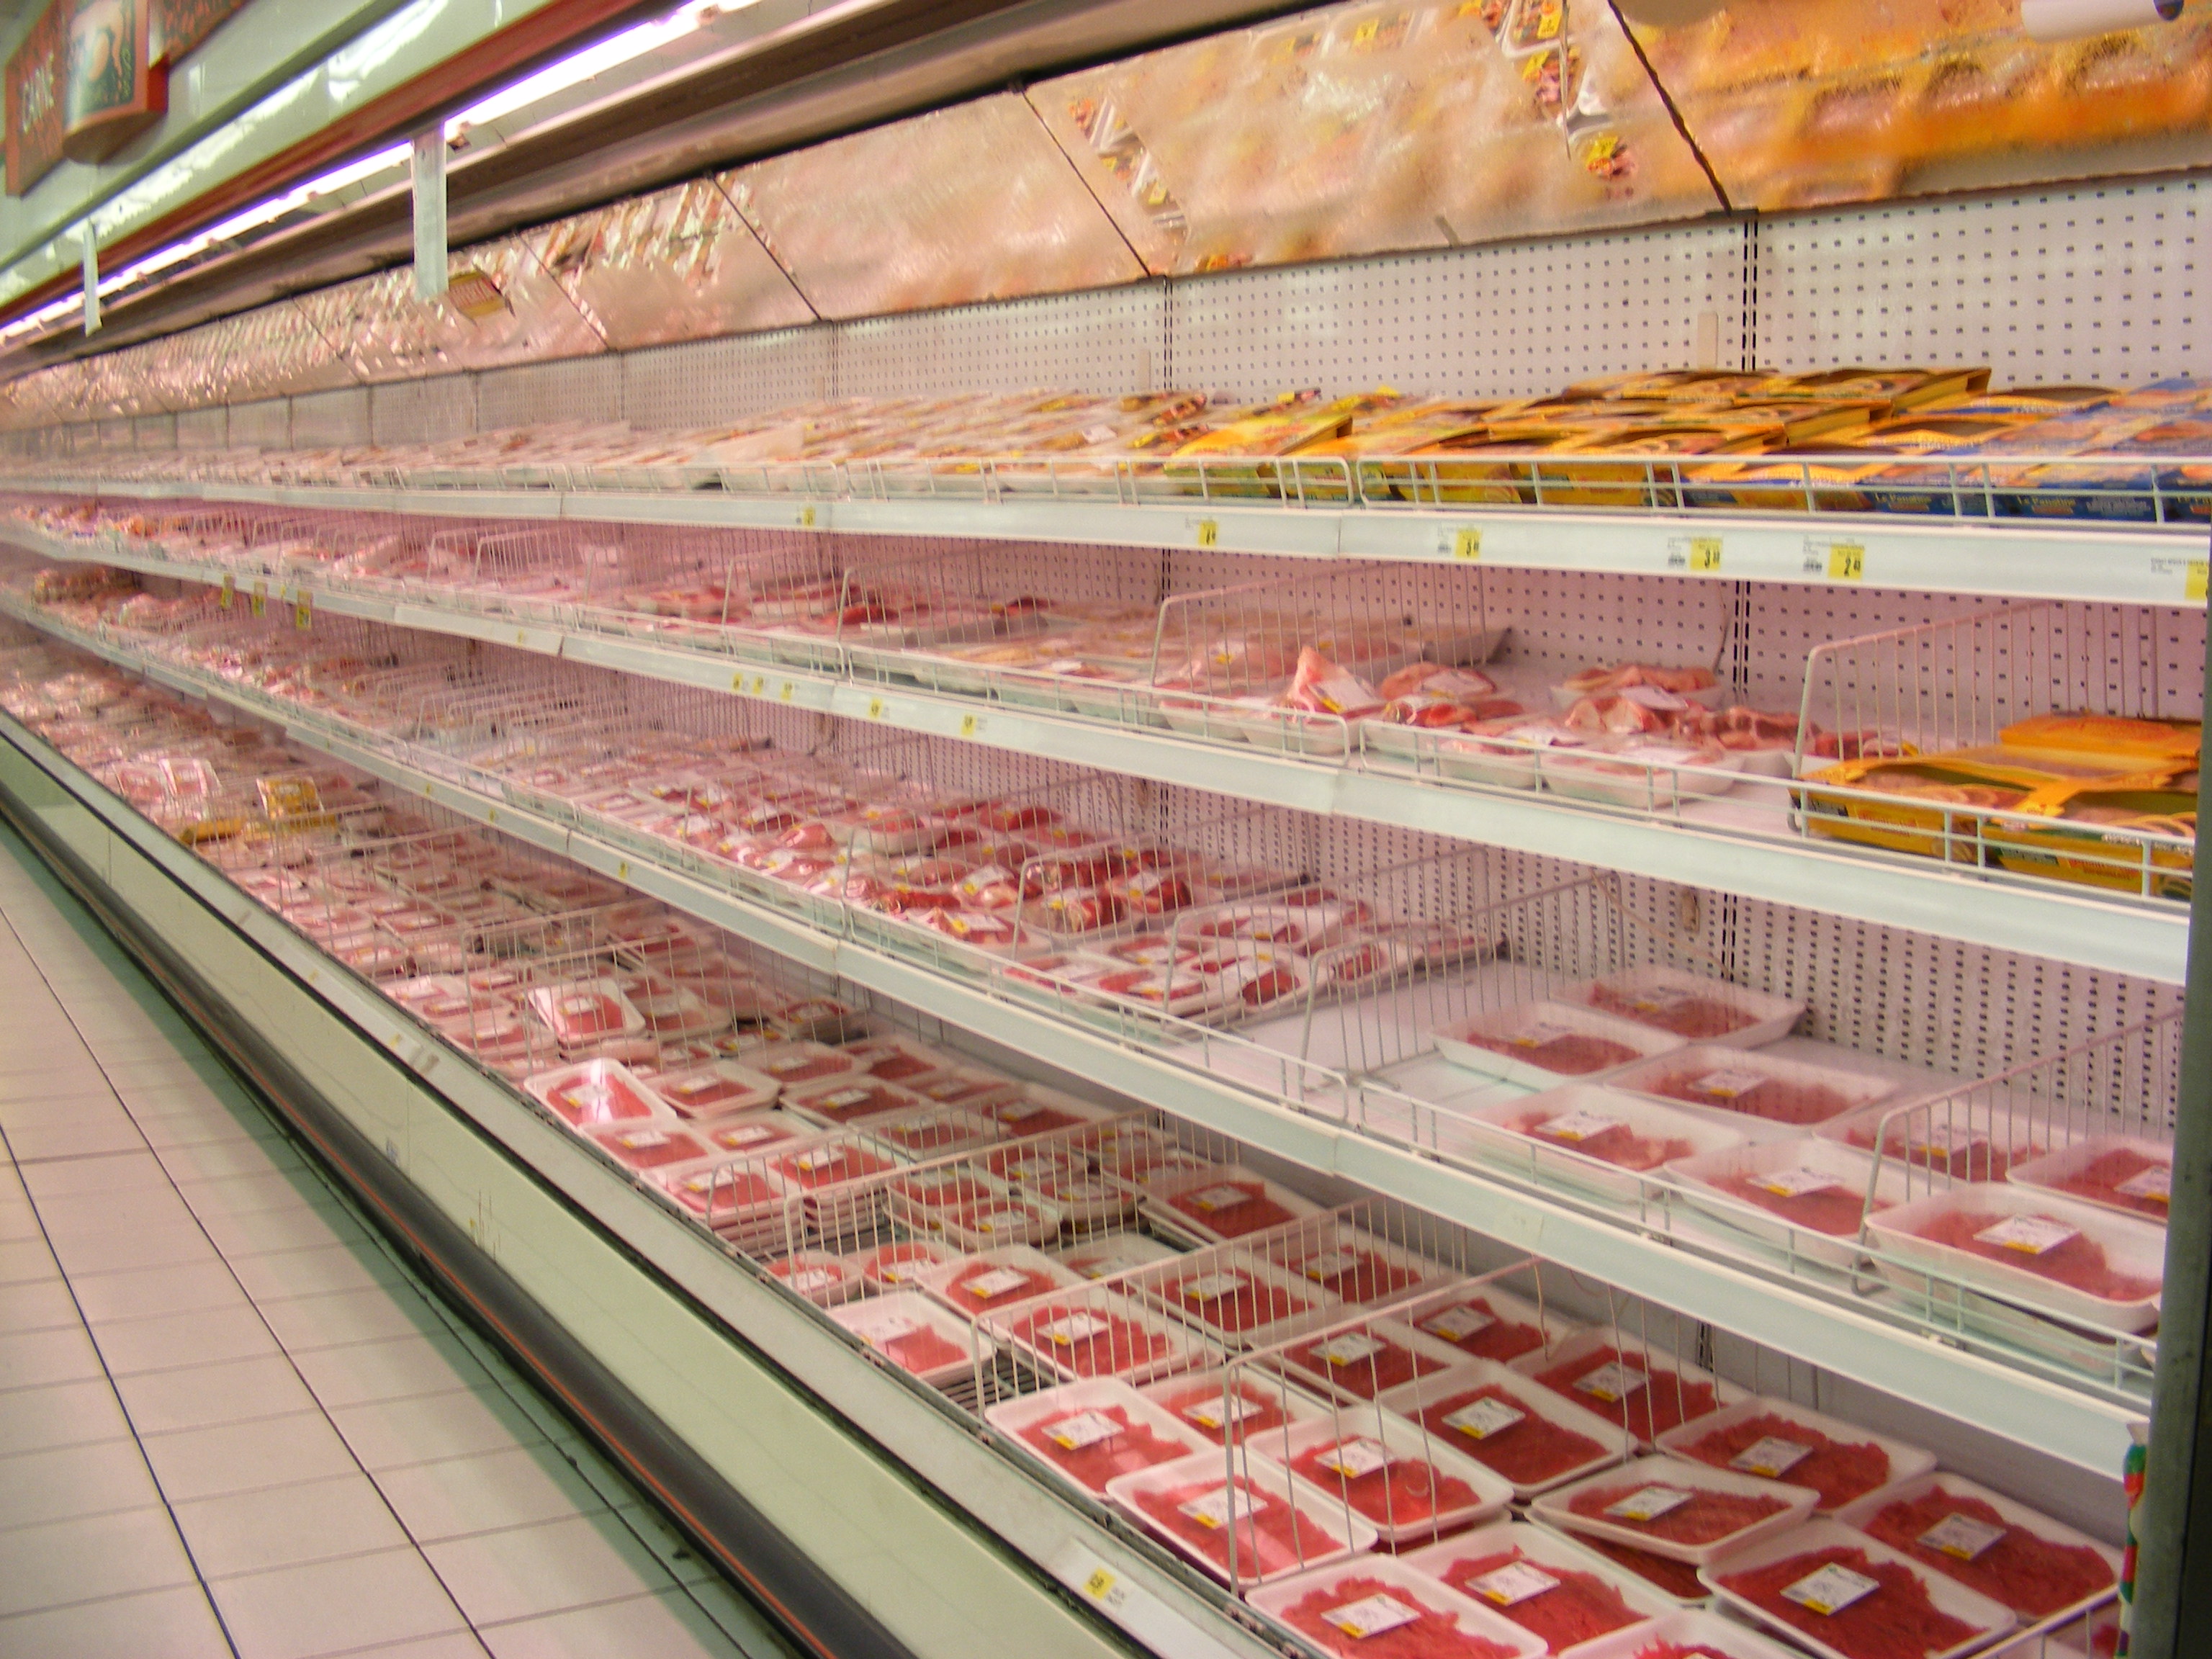 file-meat-packages-in-a-roman-supermarket-jpg-wikipedia